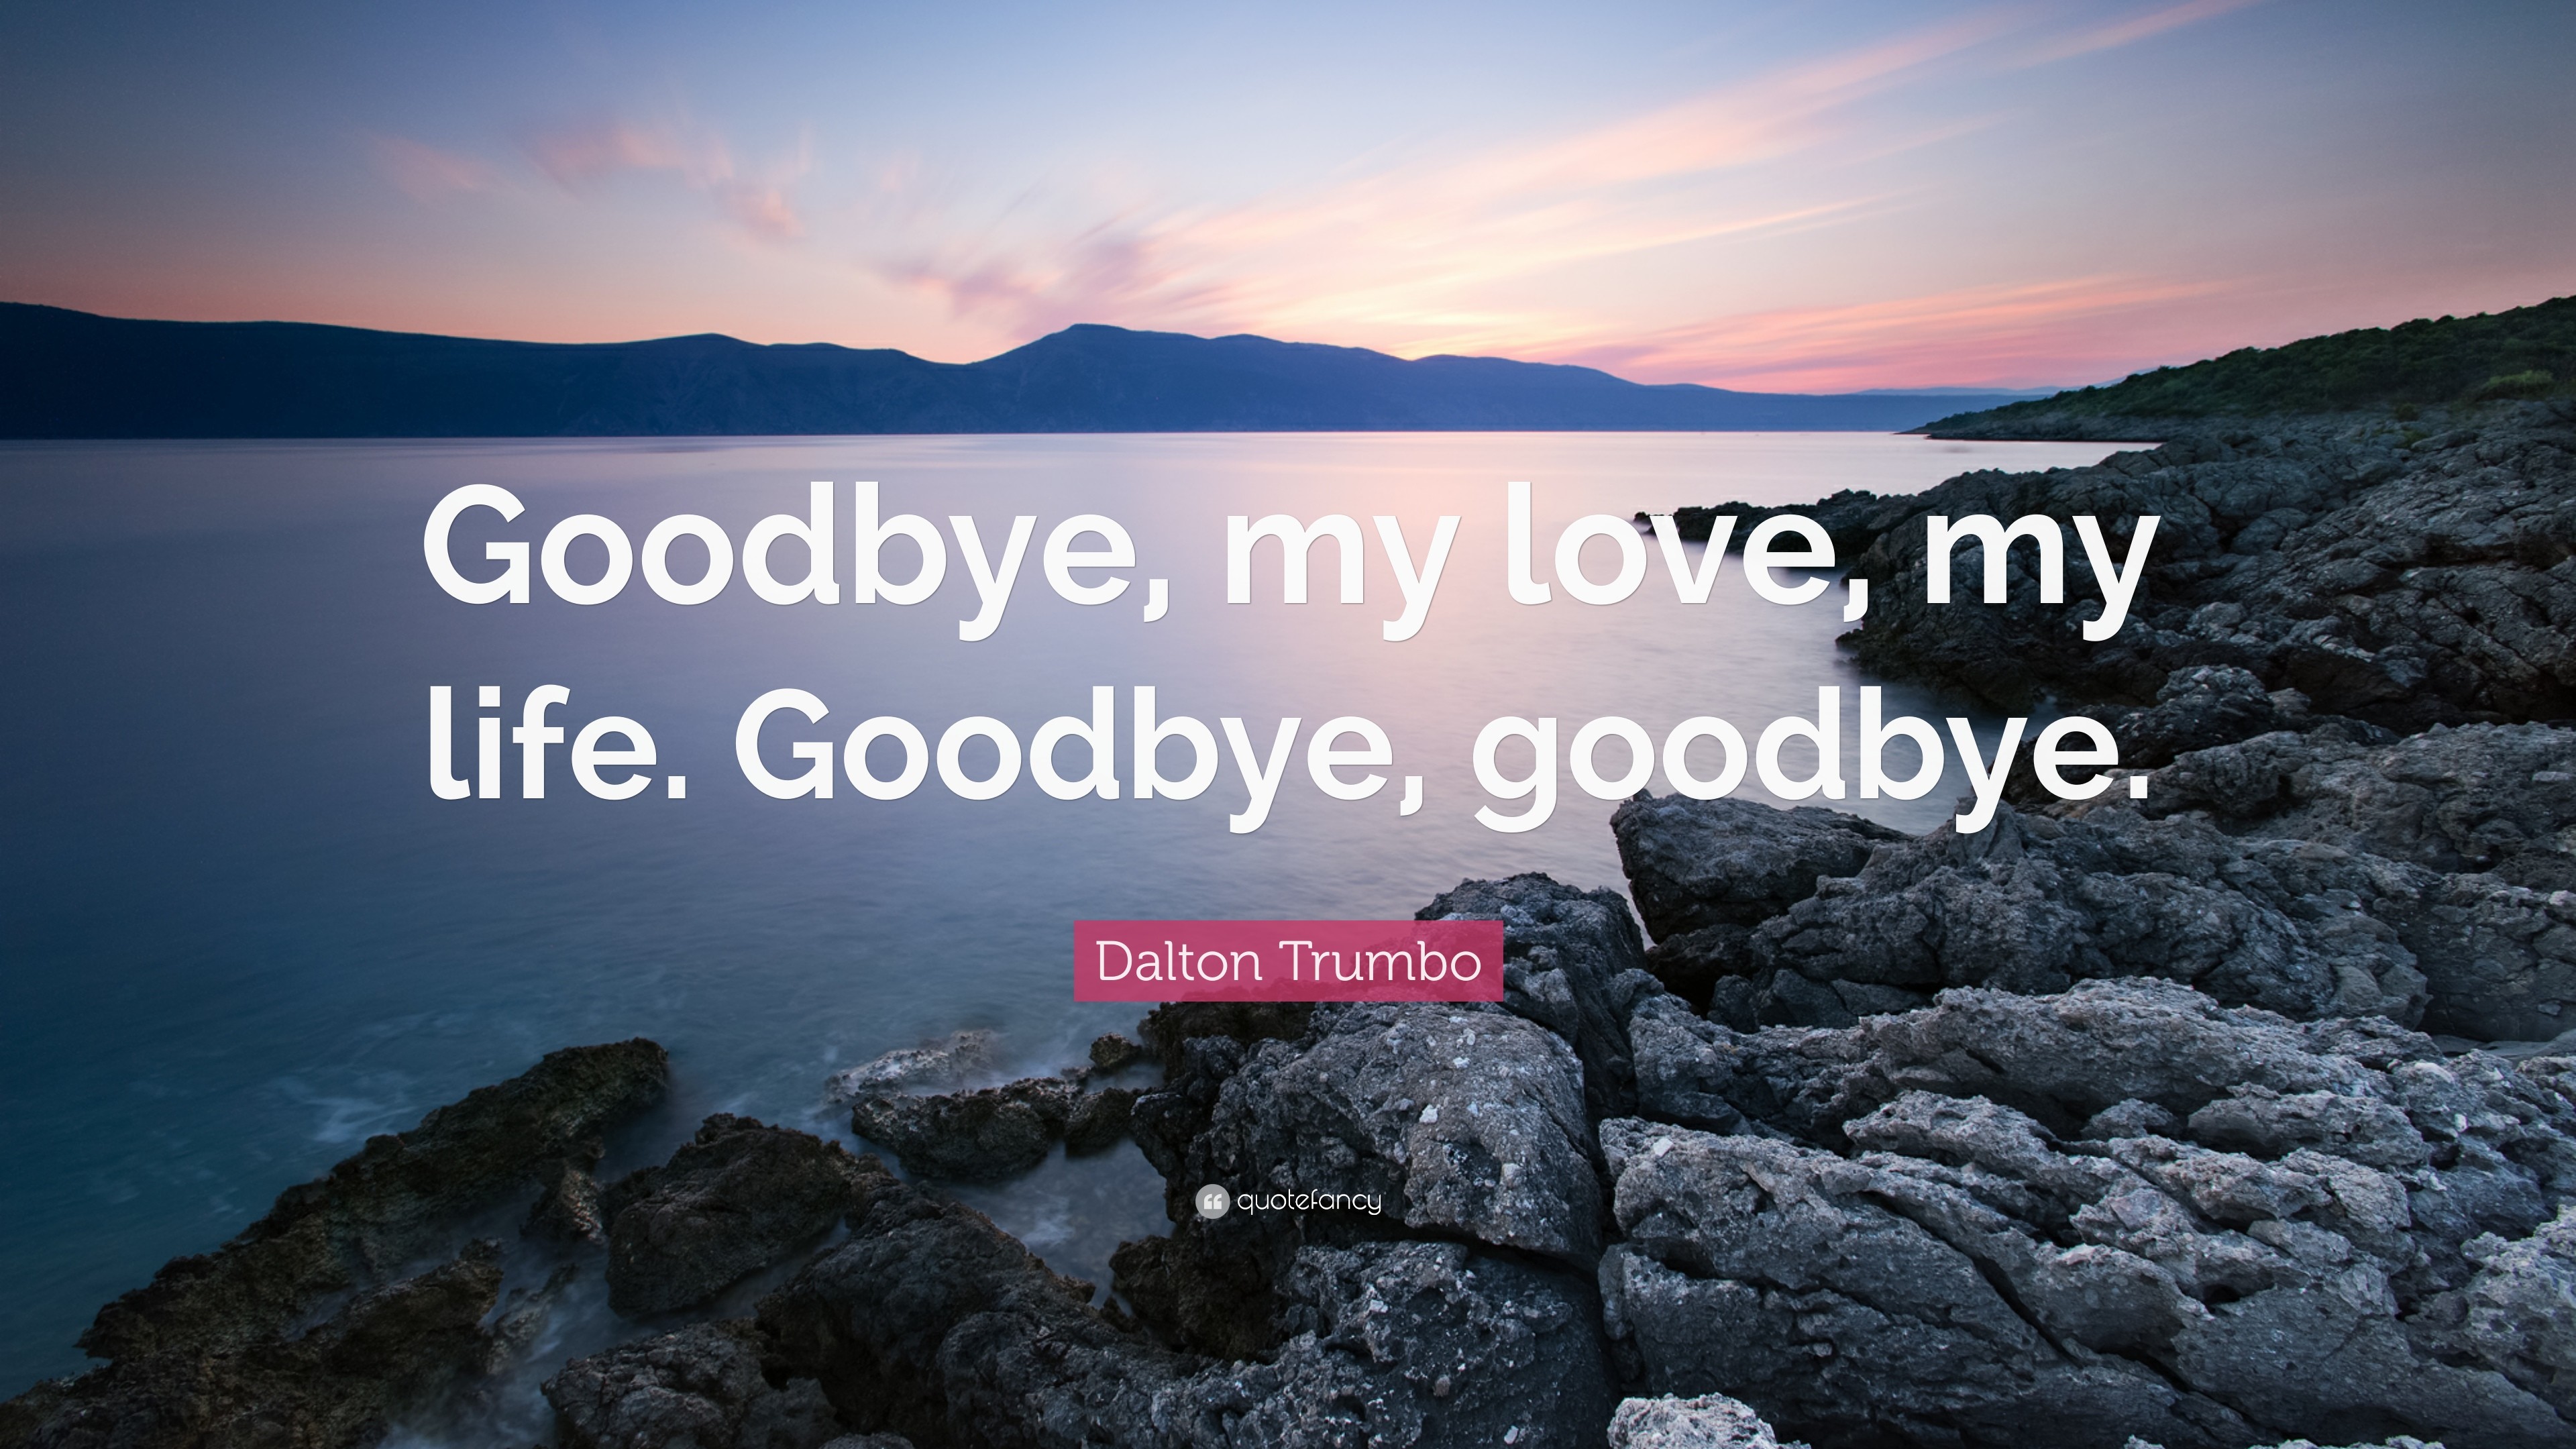 3840x2160 Dalton Trumbo Quote: “Goodbye, my love, my life. Goodbye, goodbye